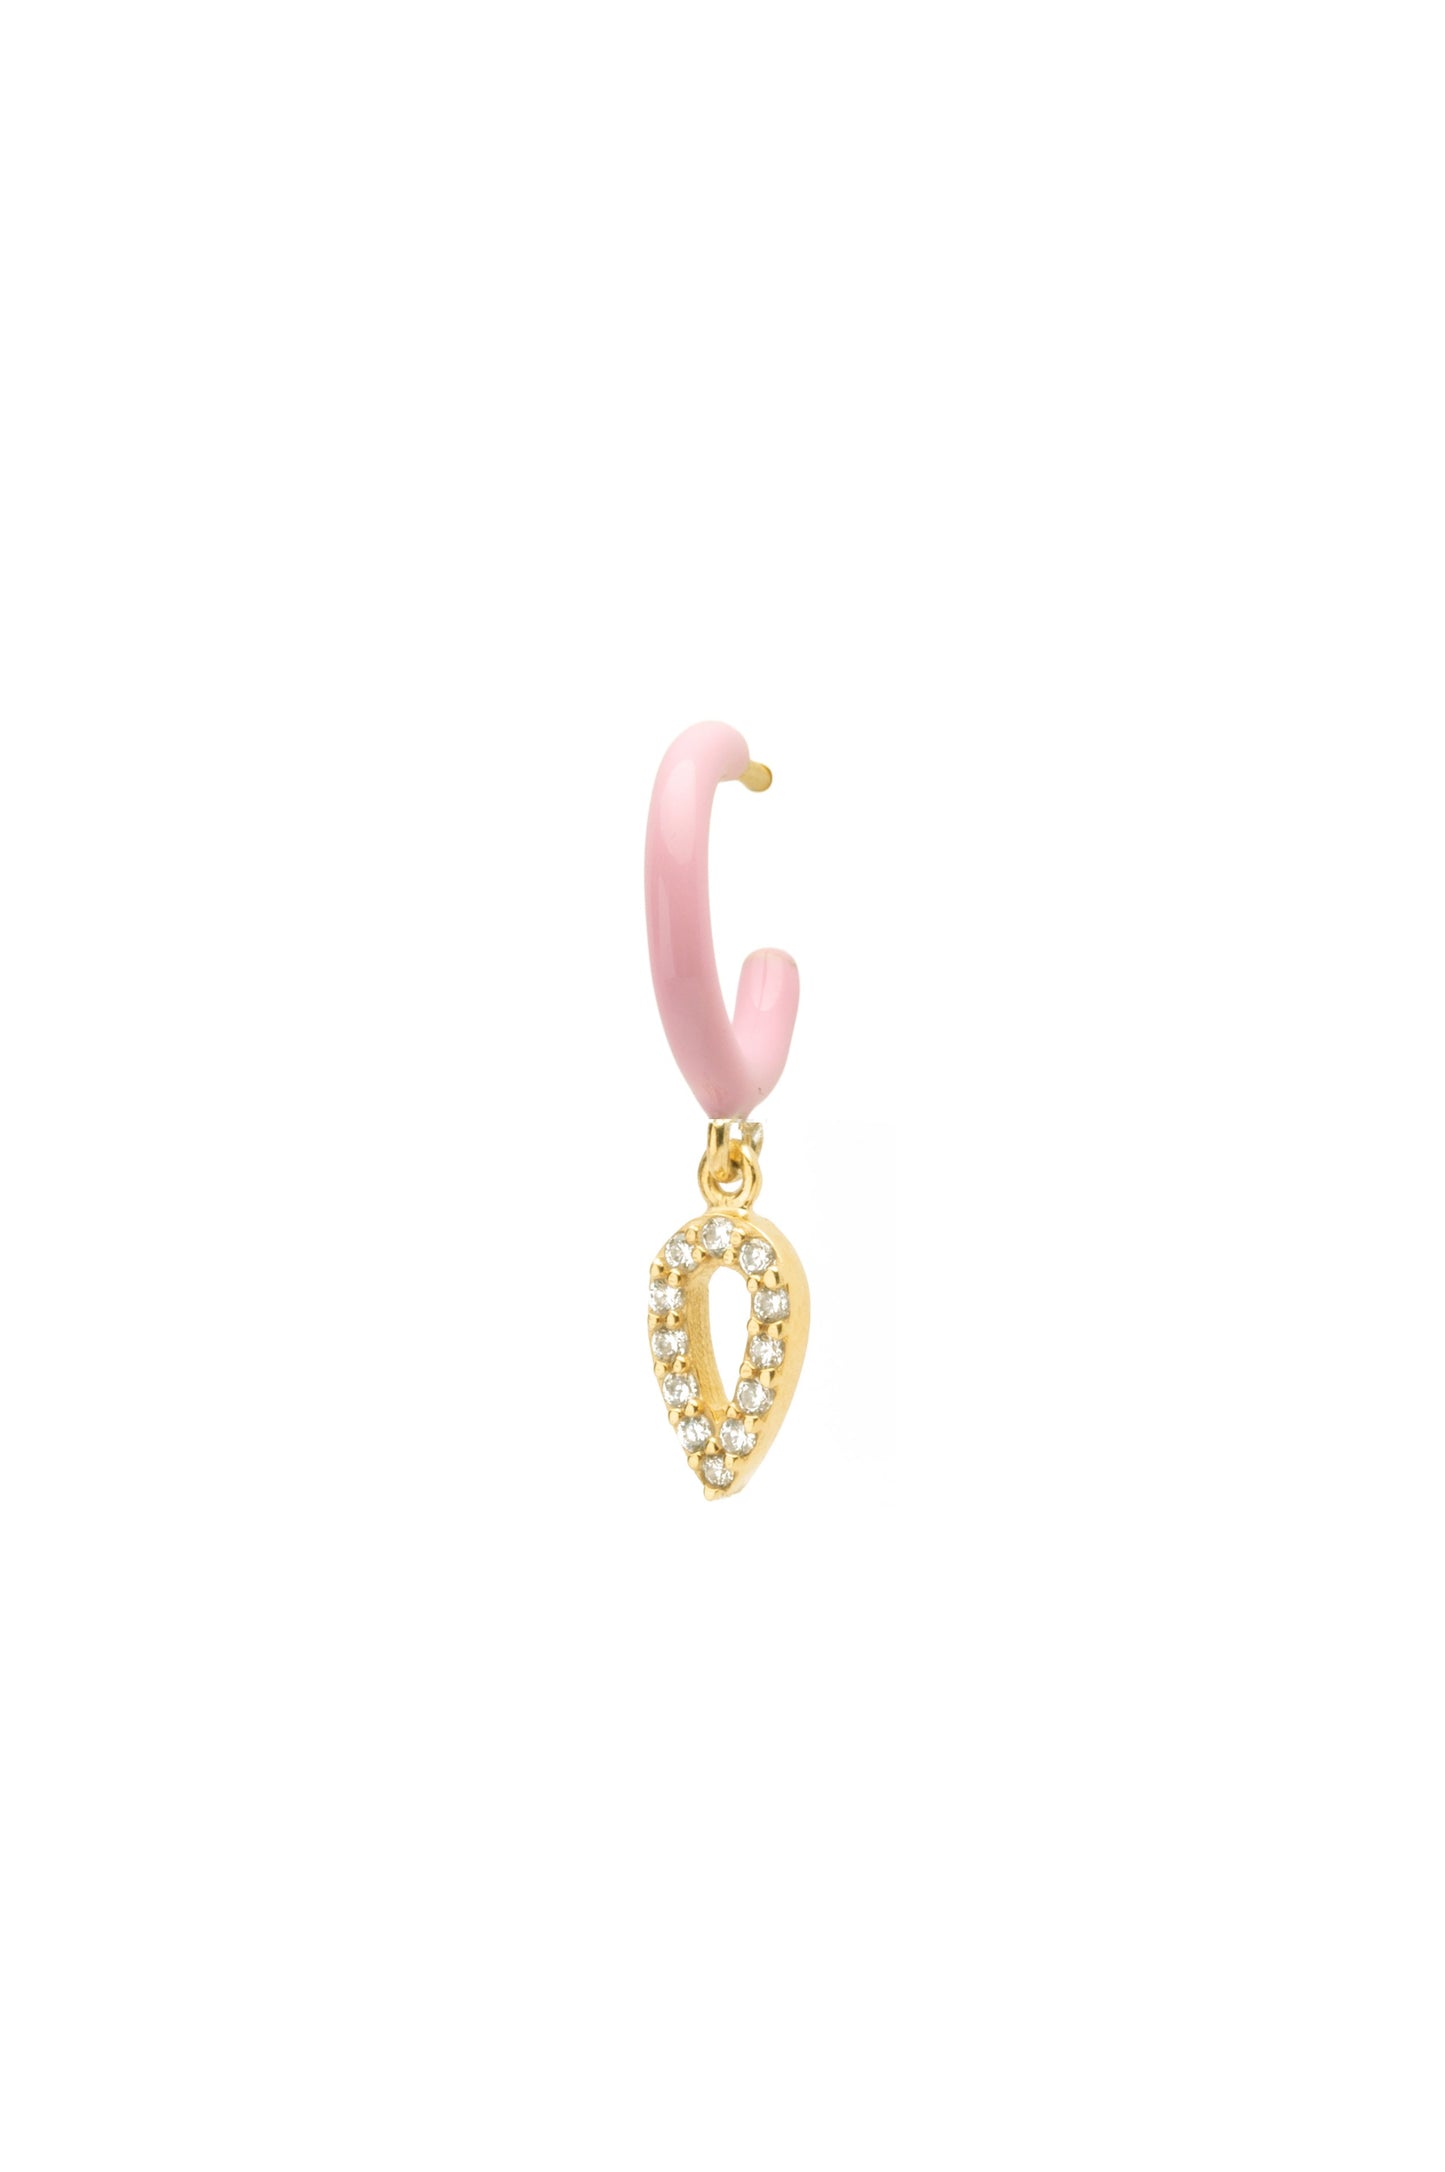 Pink Enamel Hoop with Tear Charm Single Earring - Gold Plated